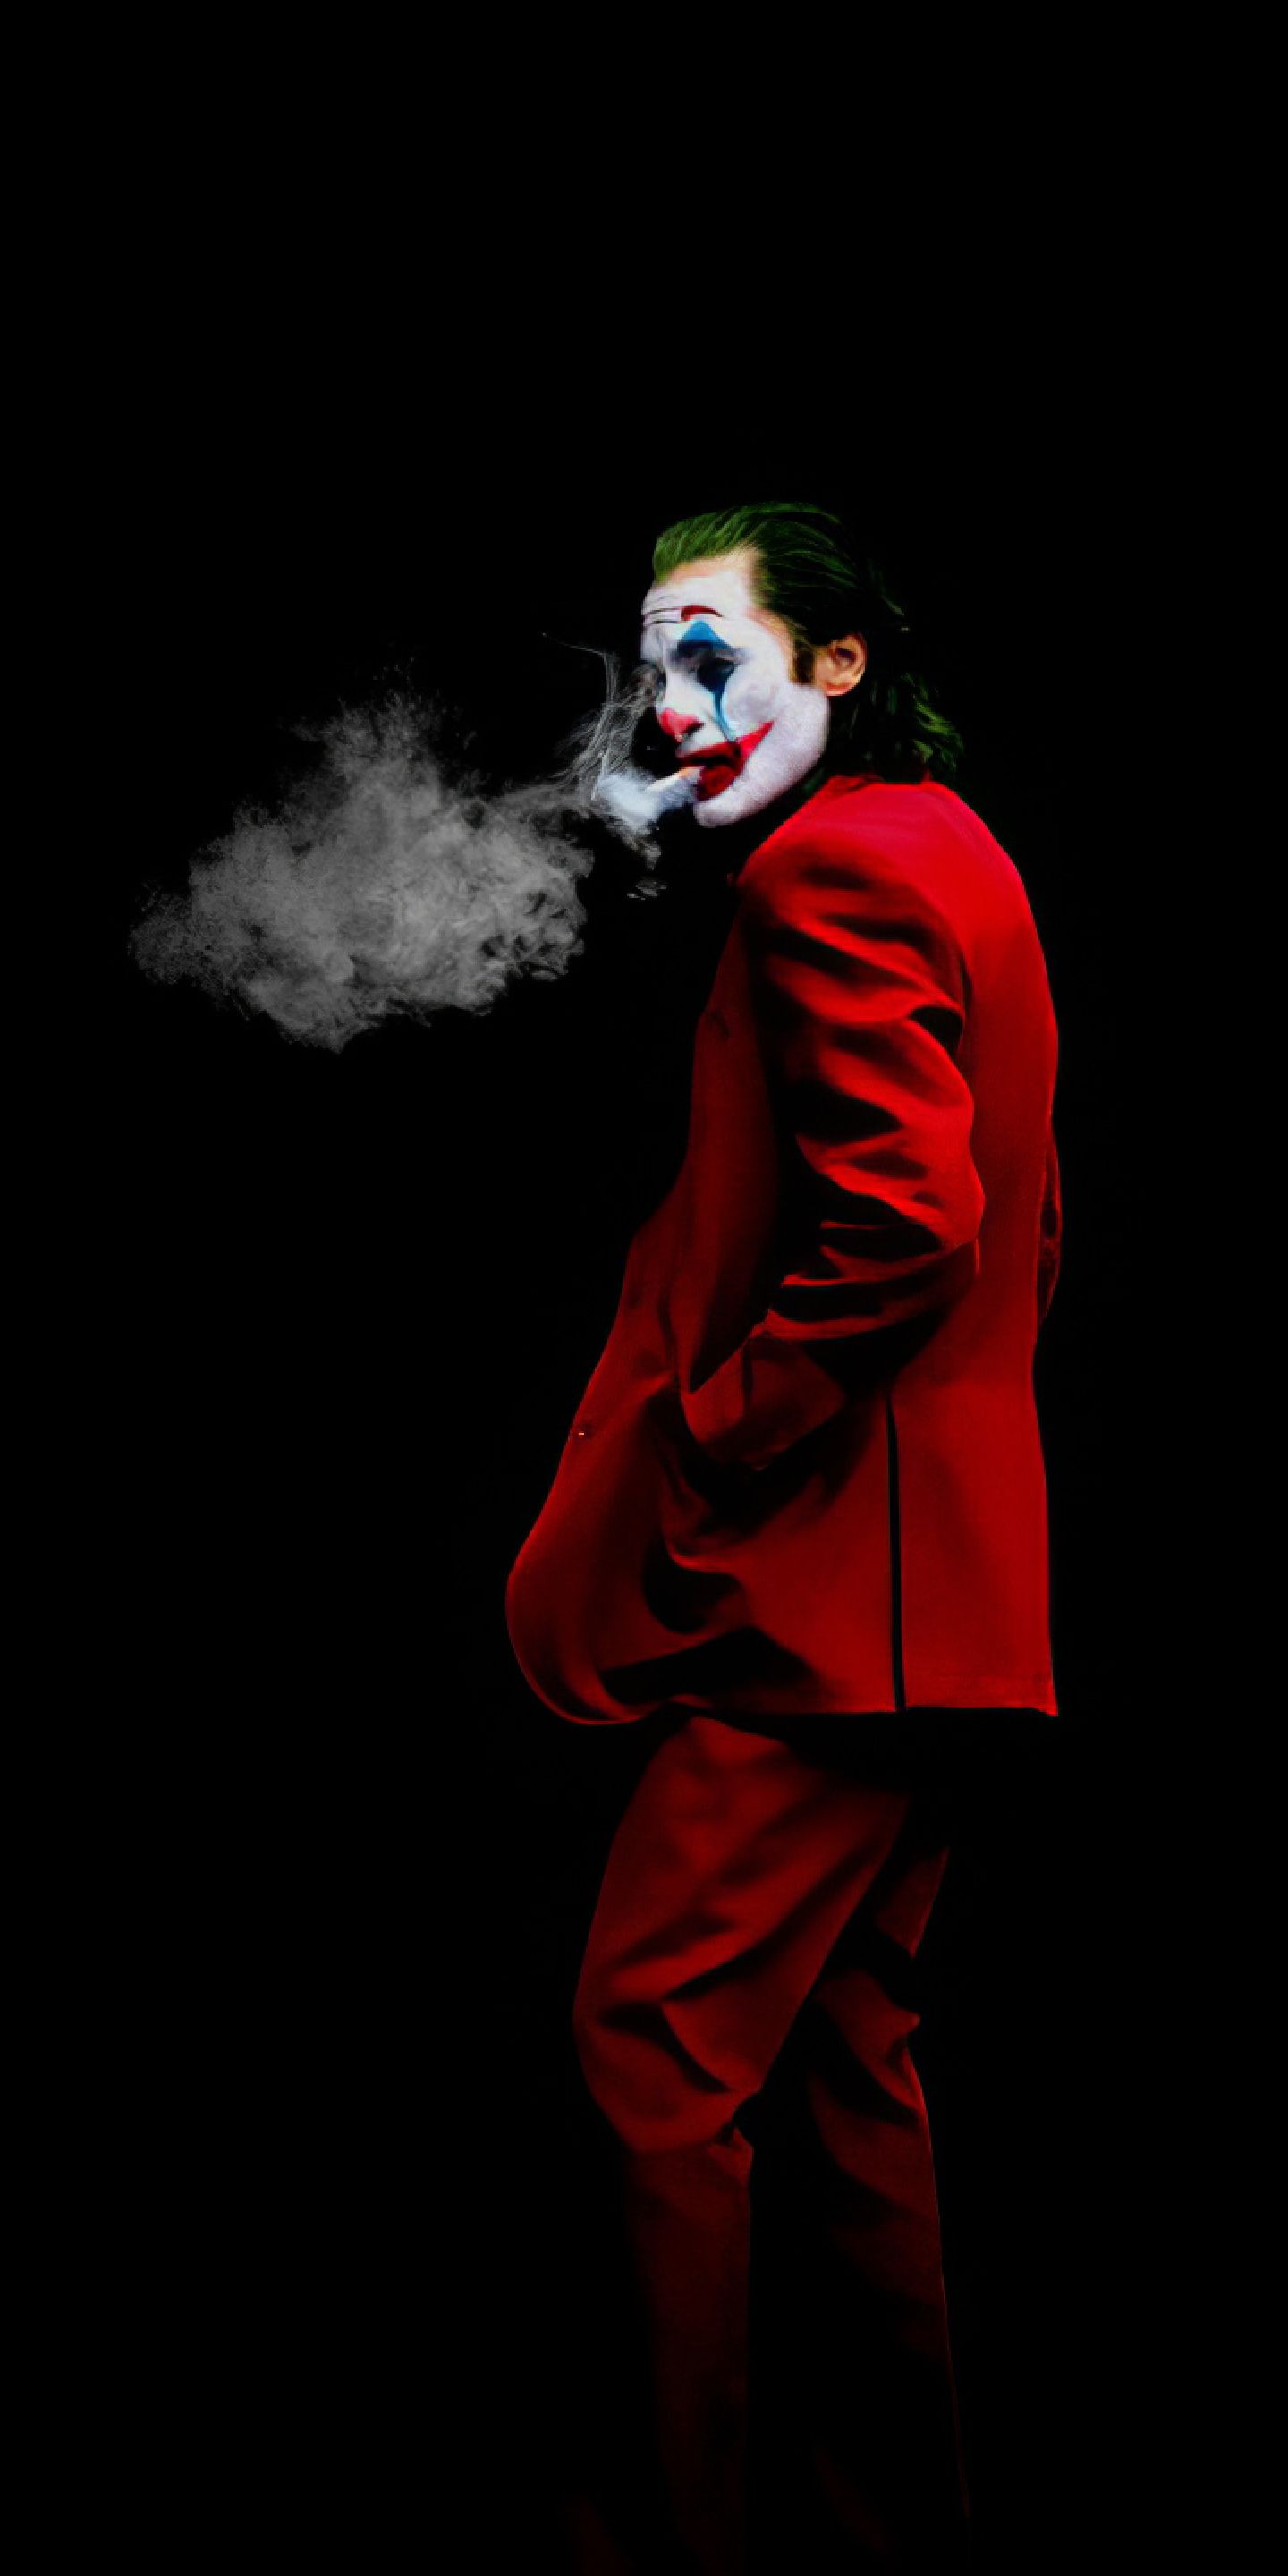 New Joker 2020 Art 1440x2880 Resolution Wallpaper, HD Superheroes 4K Wallpaper, Image, Photo and Background